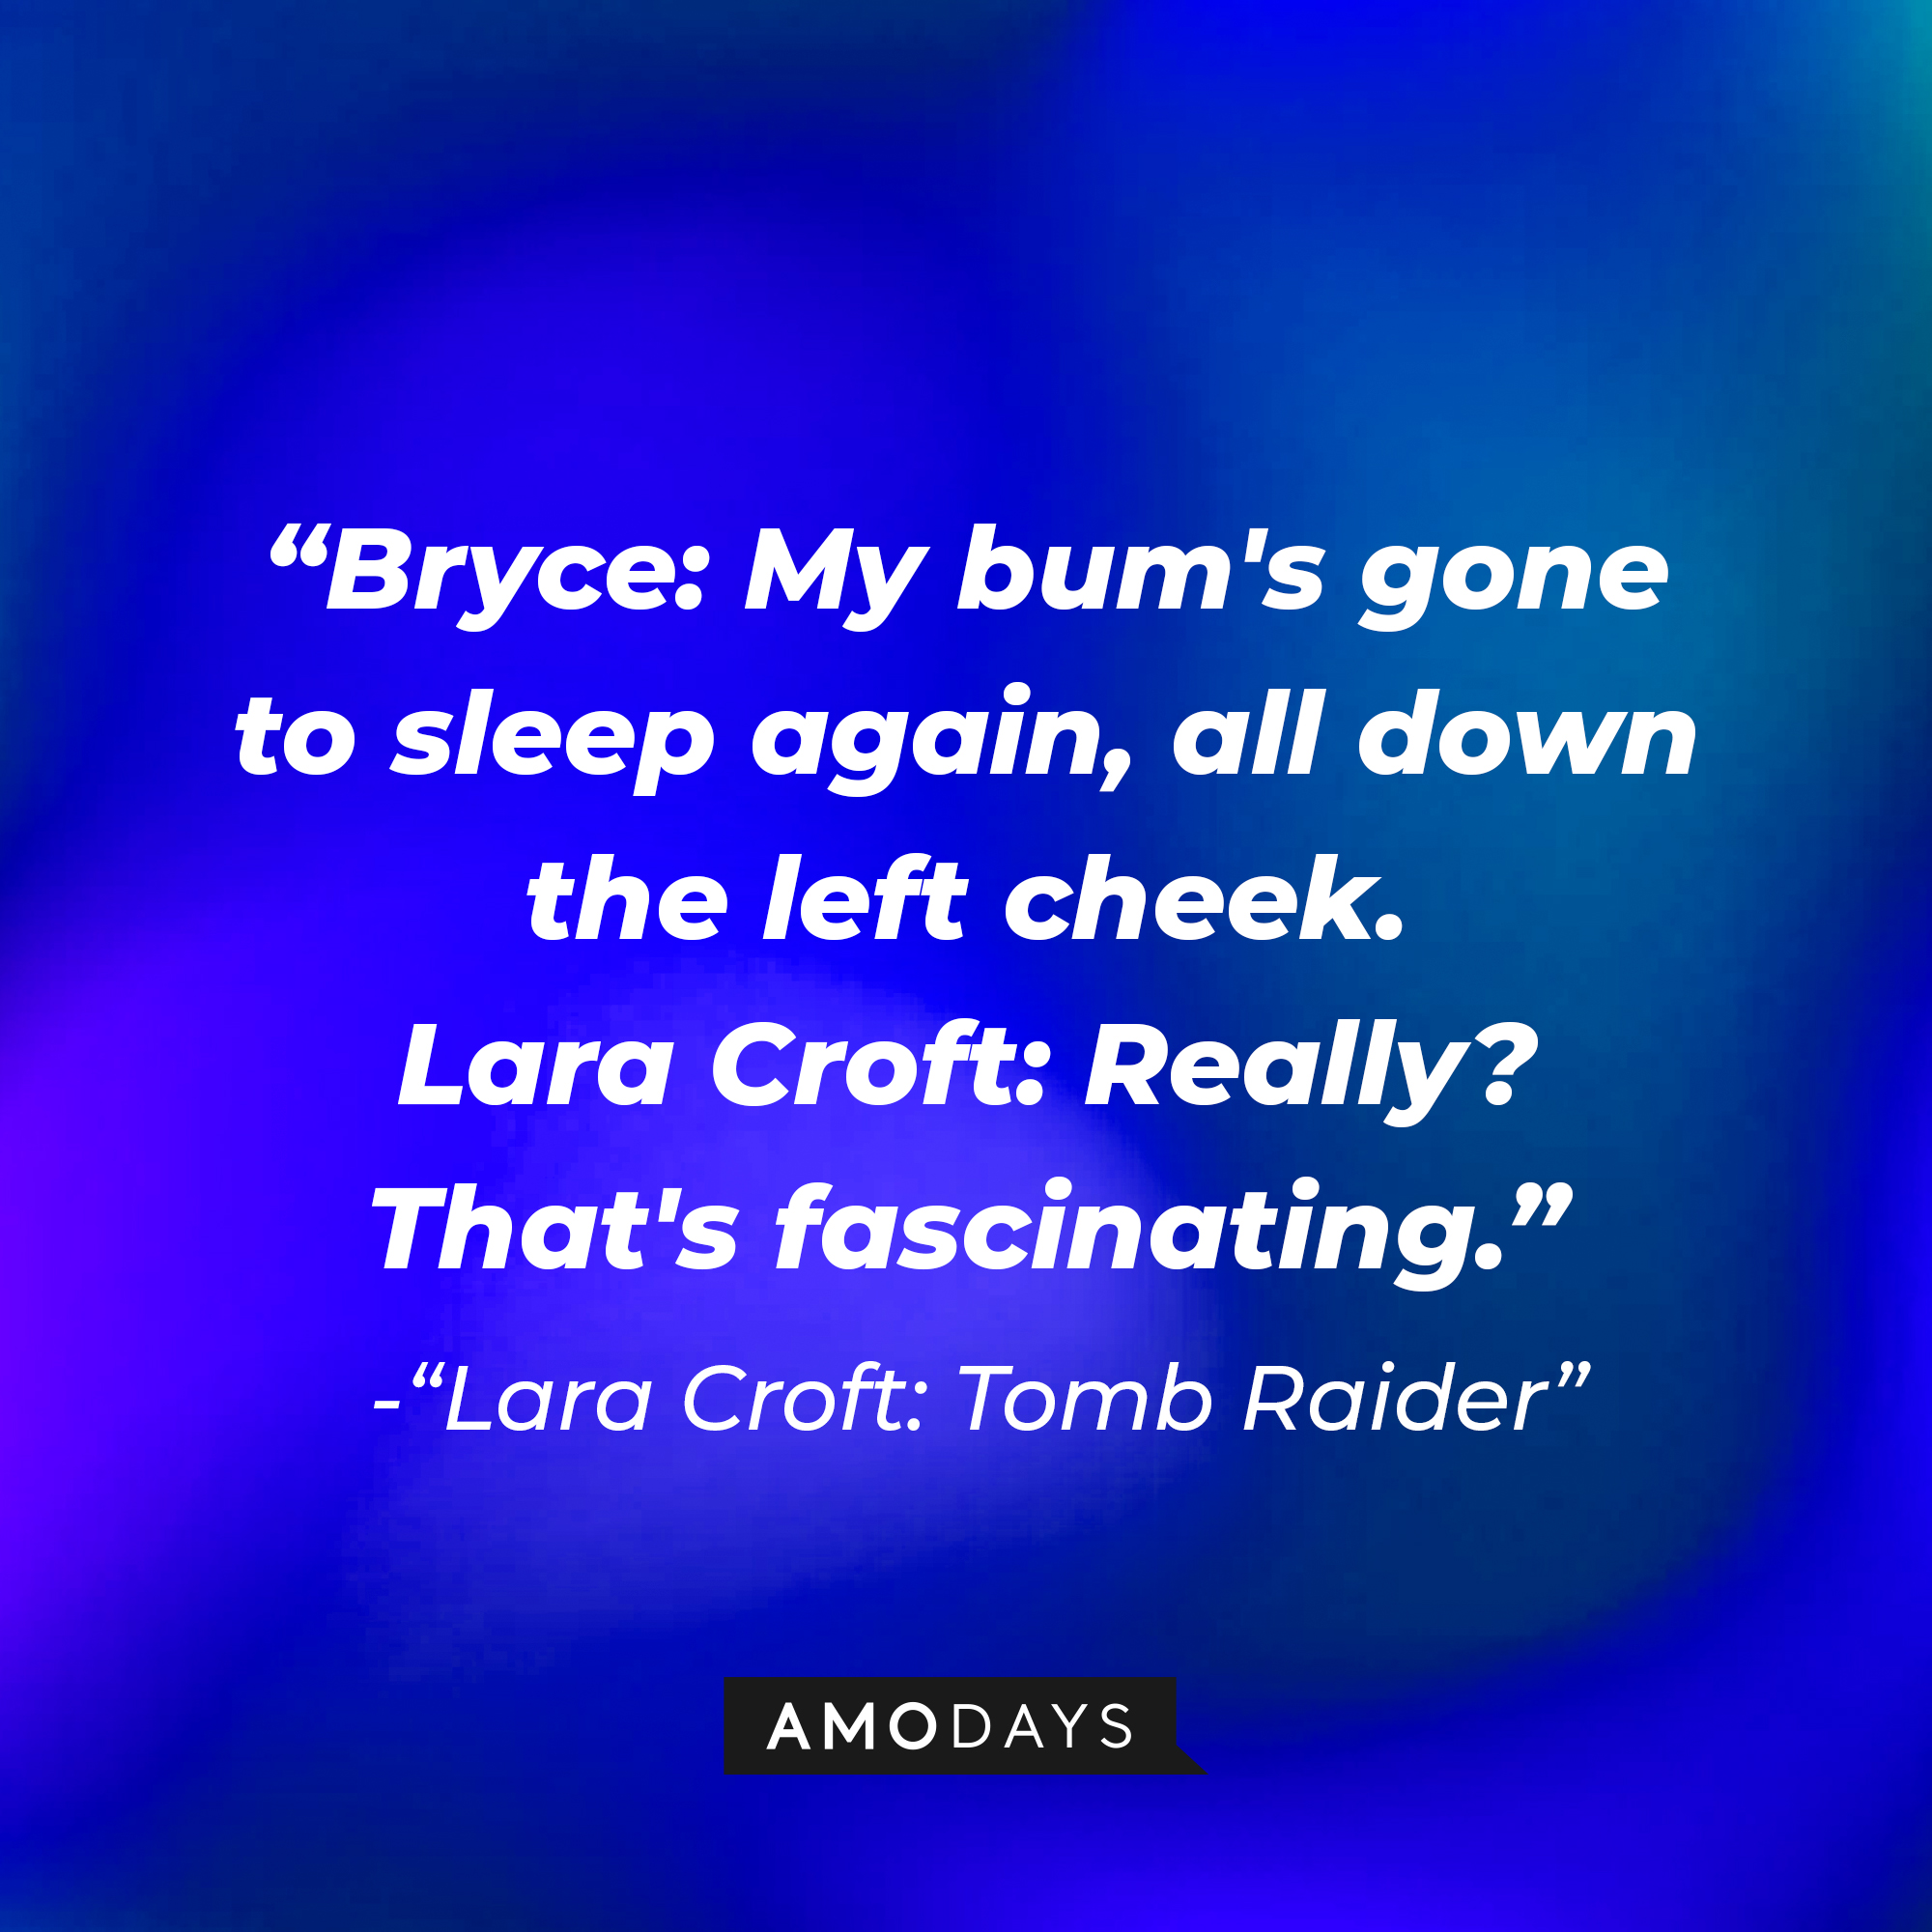 Lara Croft's "Lara Croft: Tomb Raider" quote: "Bryce: My bum's gone to sleep again, all down the left cheek. / Lara Croft: Really? That's fascinating." | Source: AmoDays